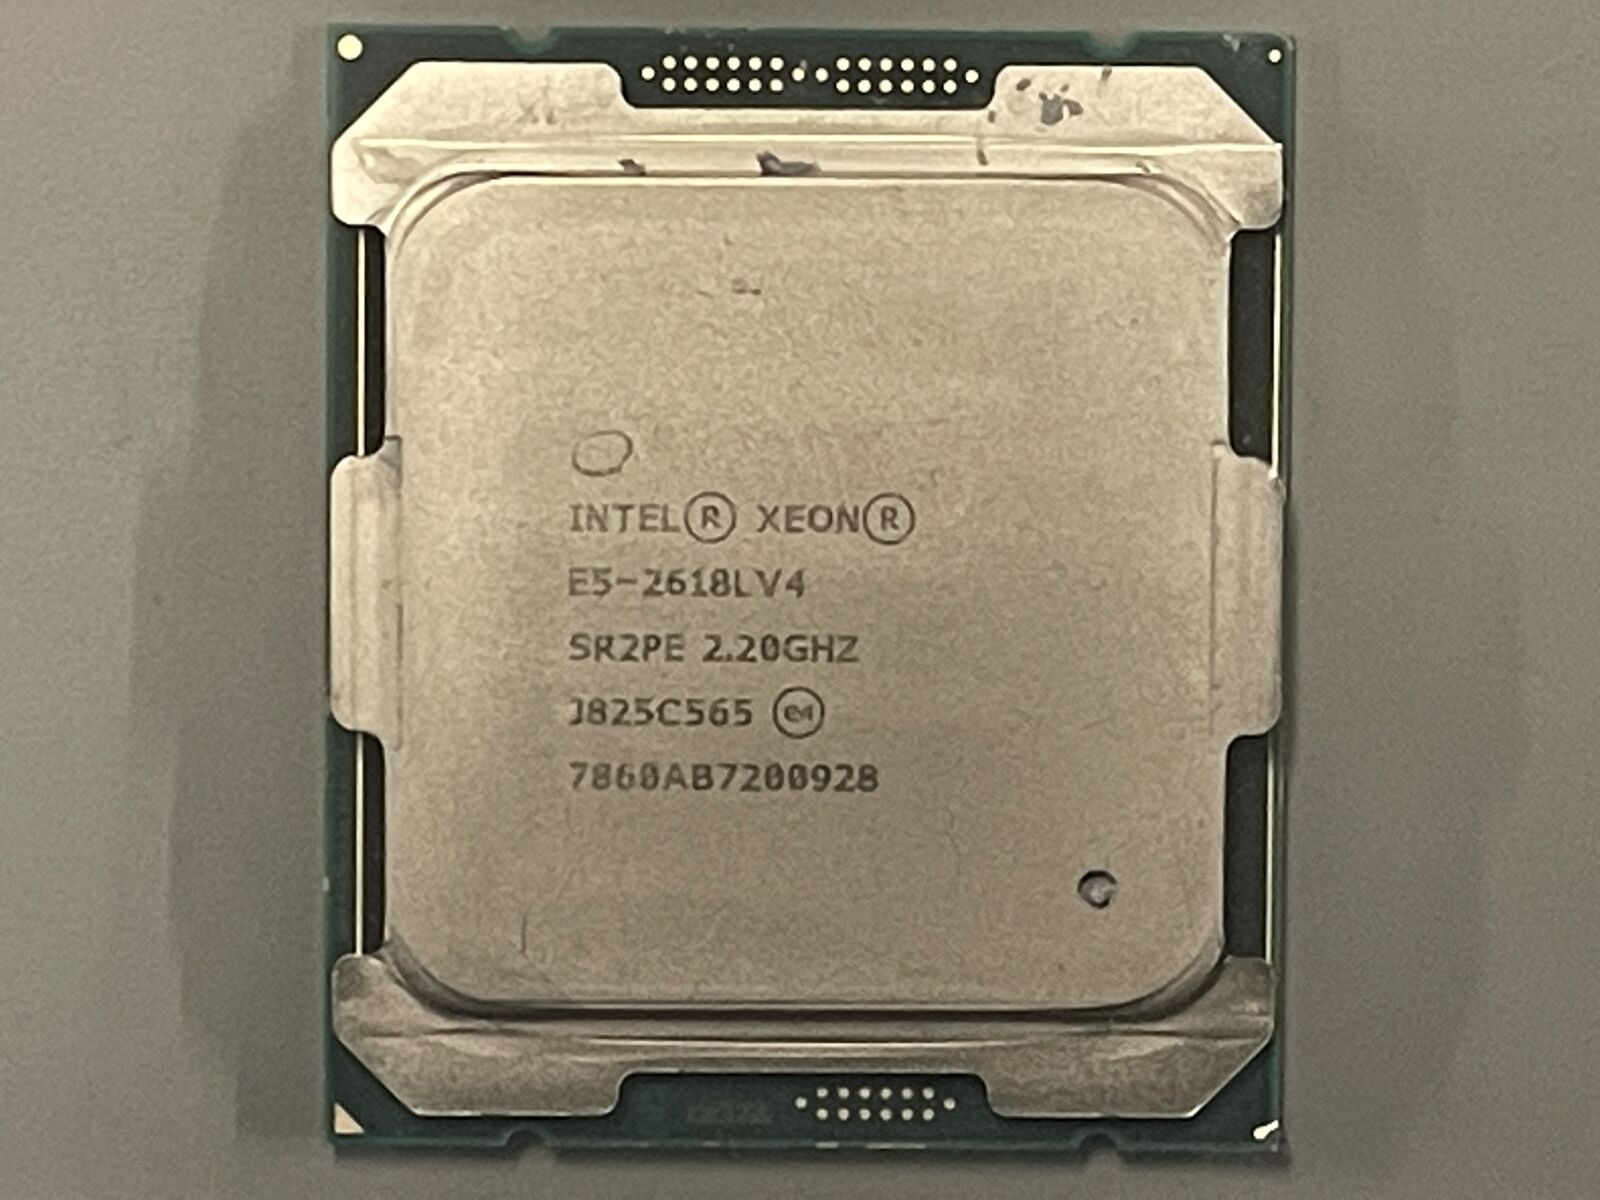 Lot of 30 Intel Xeon E5-2618L V4 SR2PE 2.2Ghz BULK OFFERS ACCEPTED